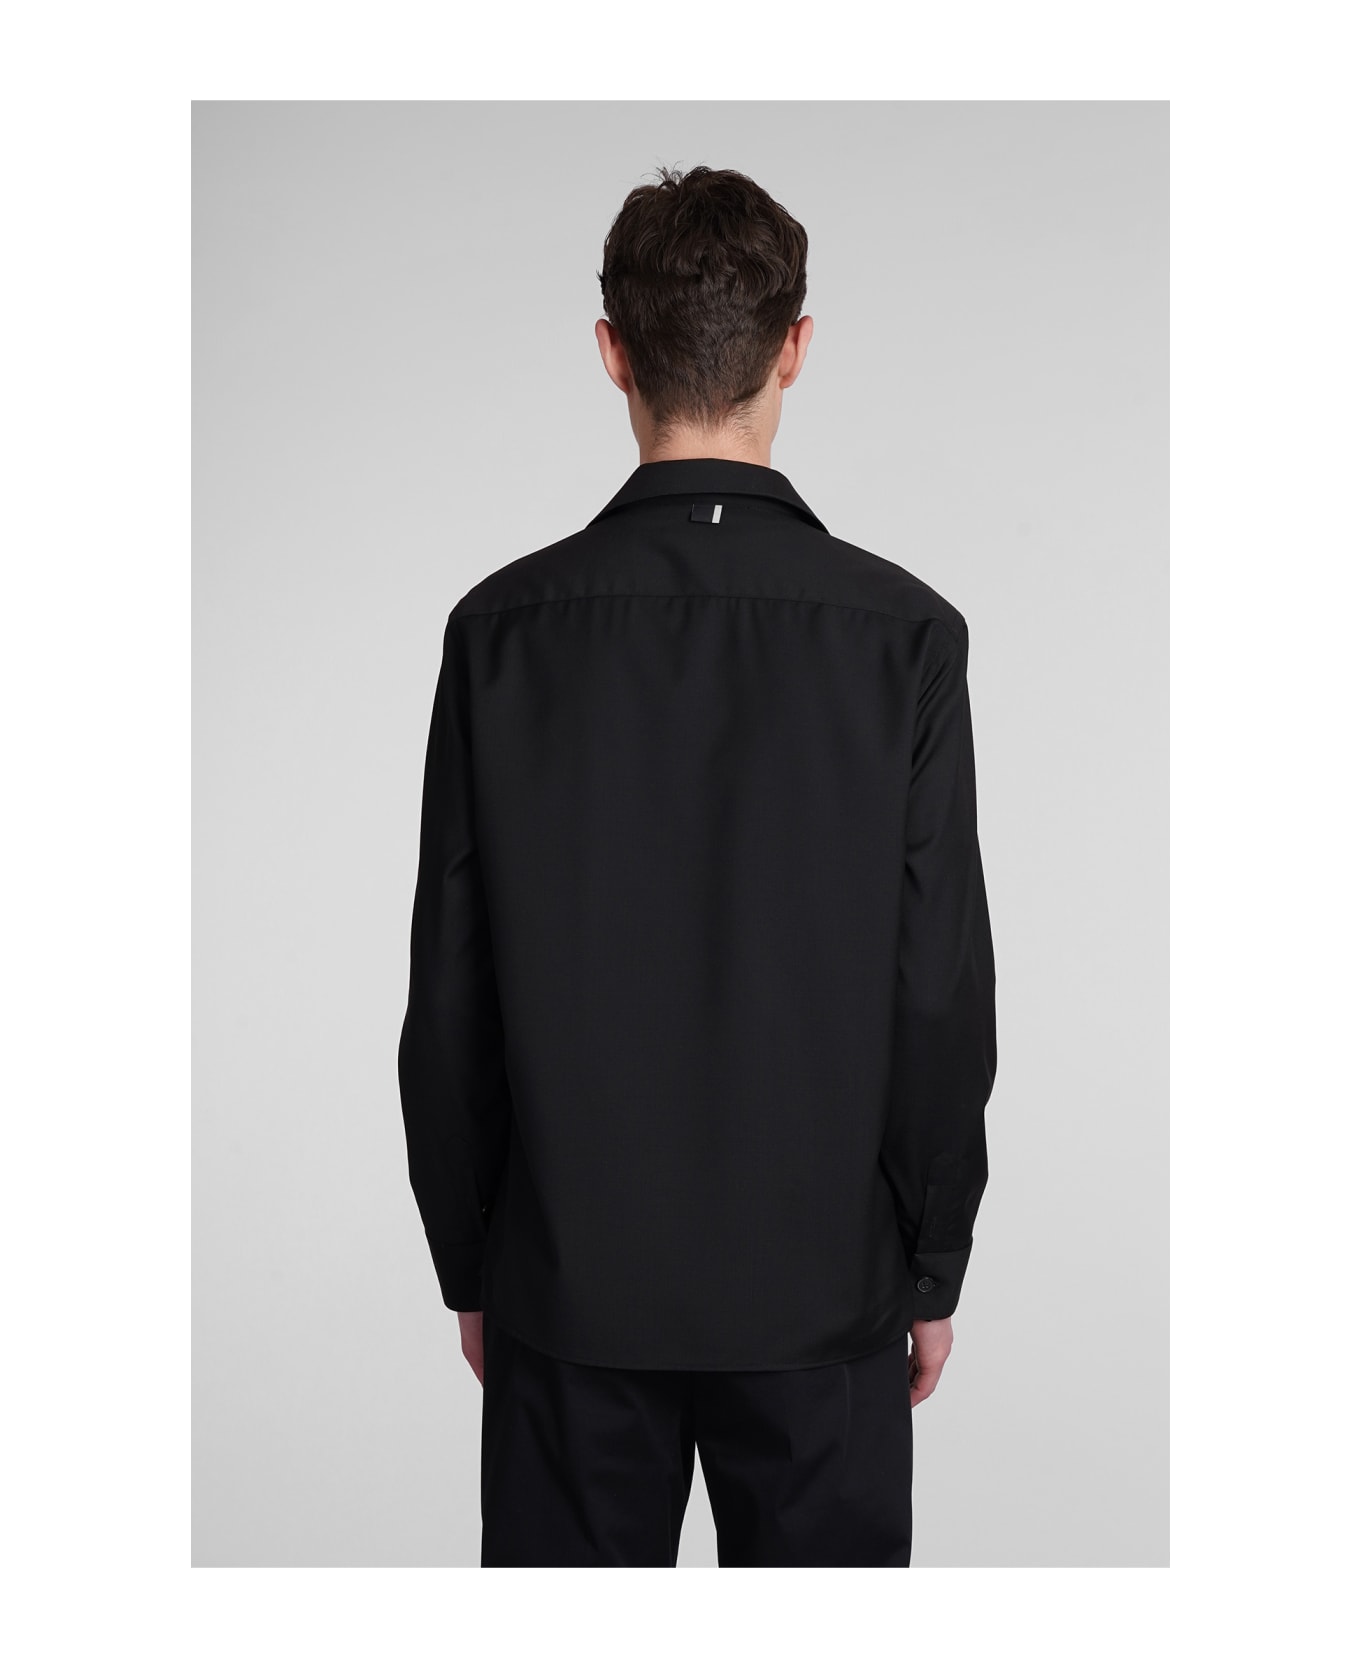 Low Brand Shirt S134 Tropical Shirt In Black Wool - black シャツ